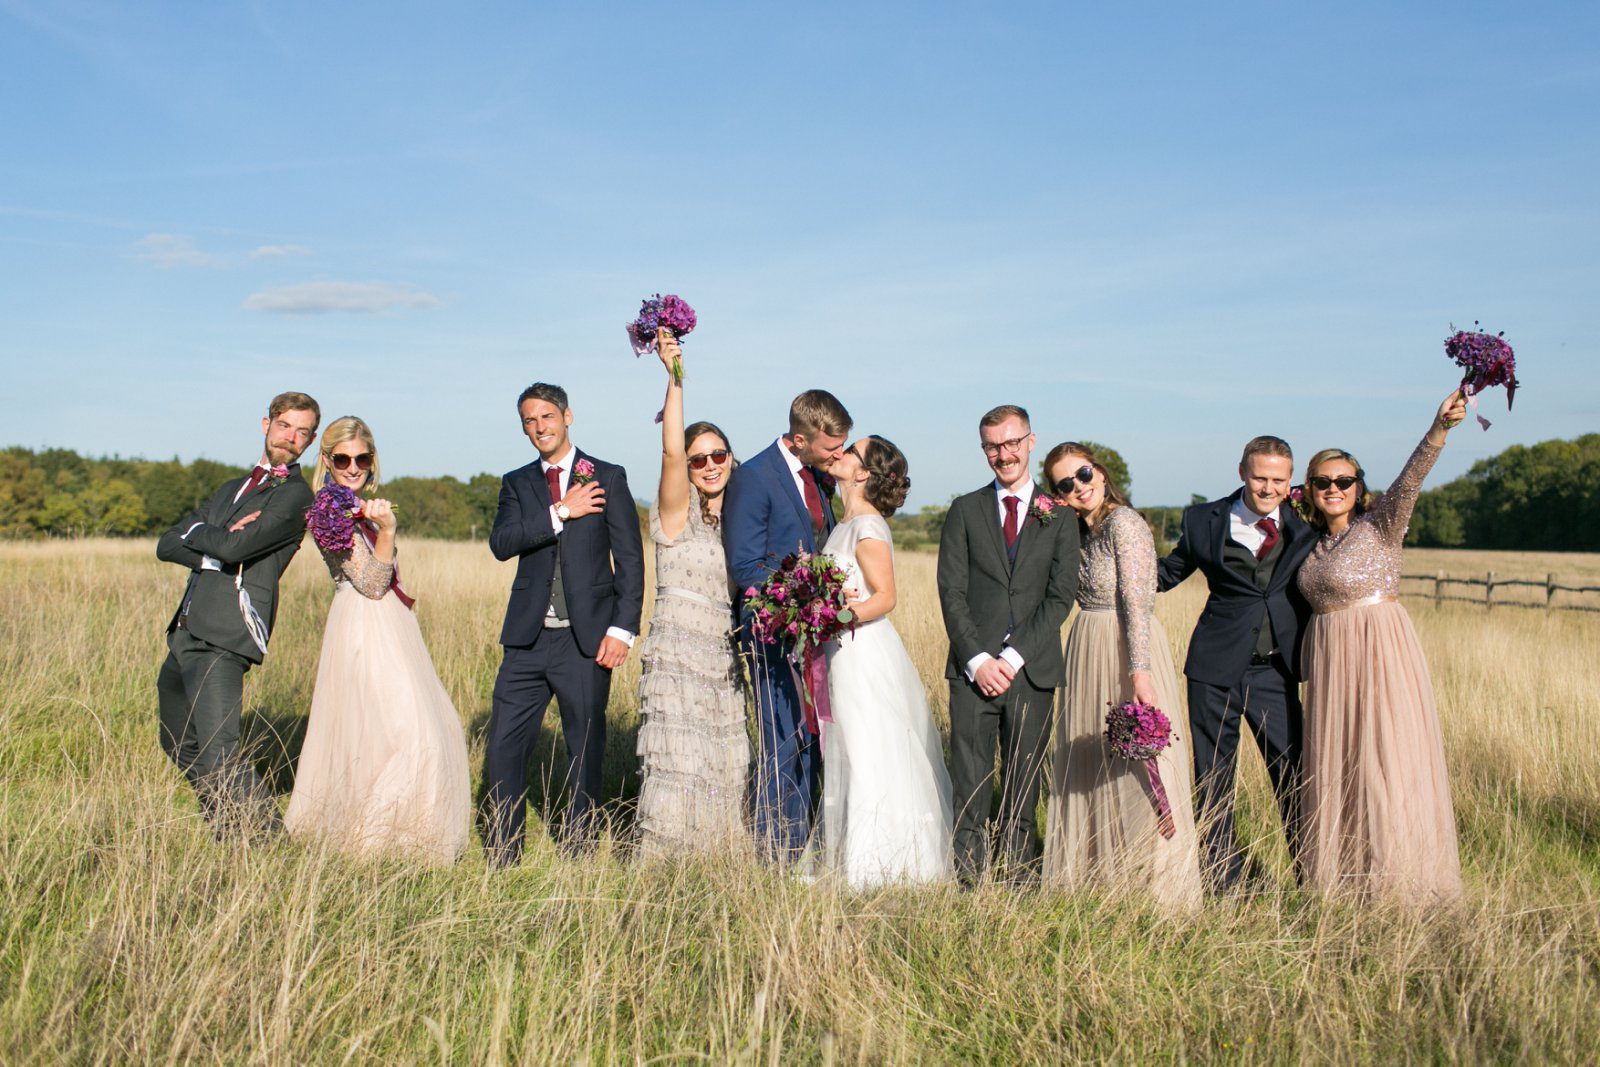 Fun wedding party photos at High Billinghurst Farm by Anneli Marinovich